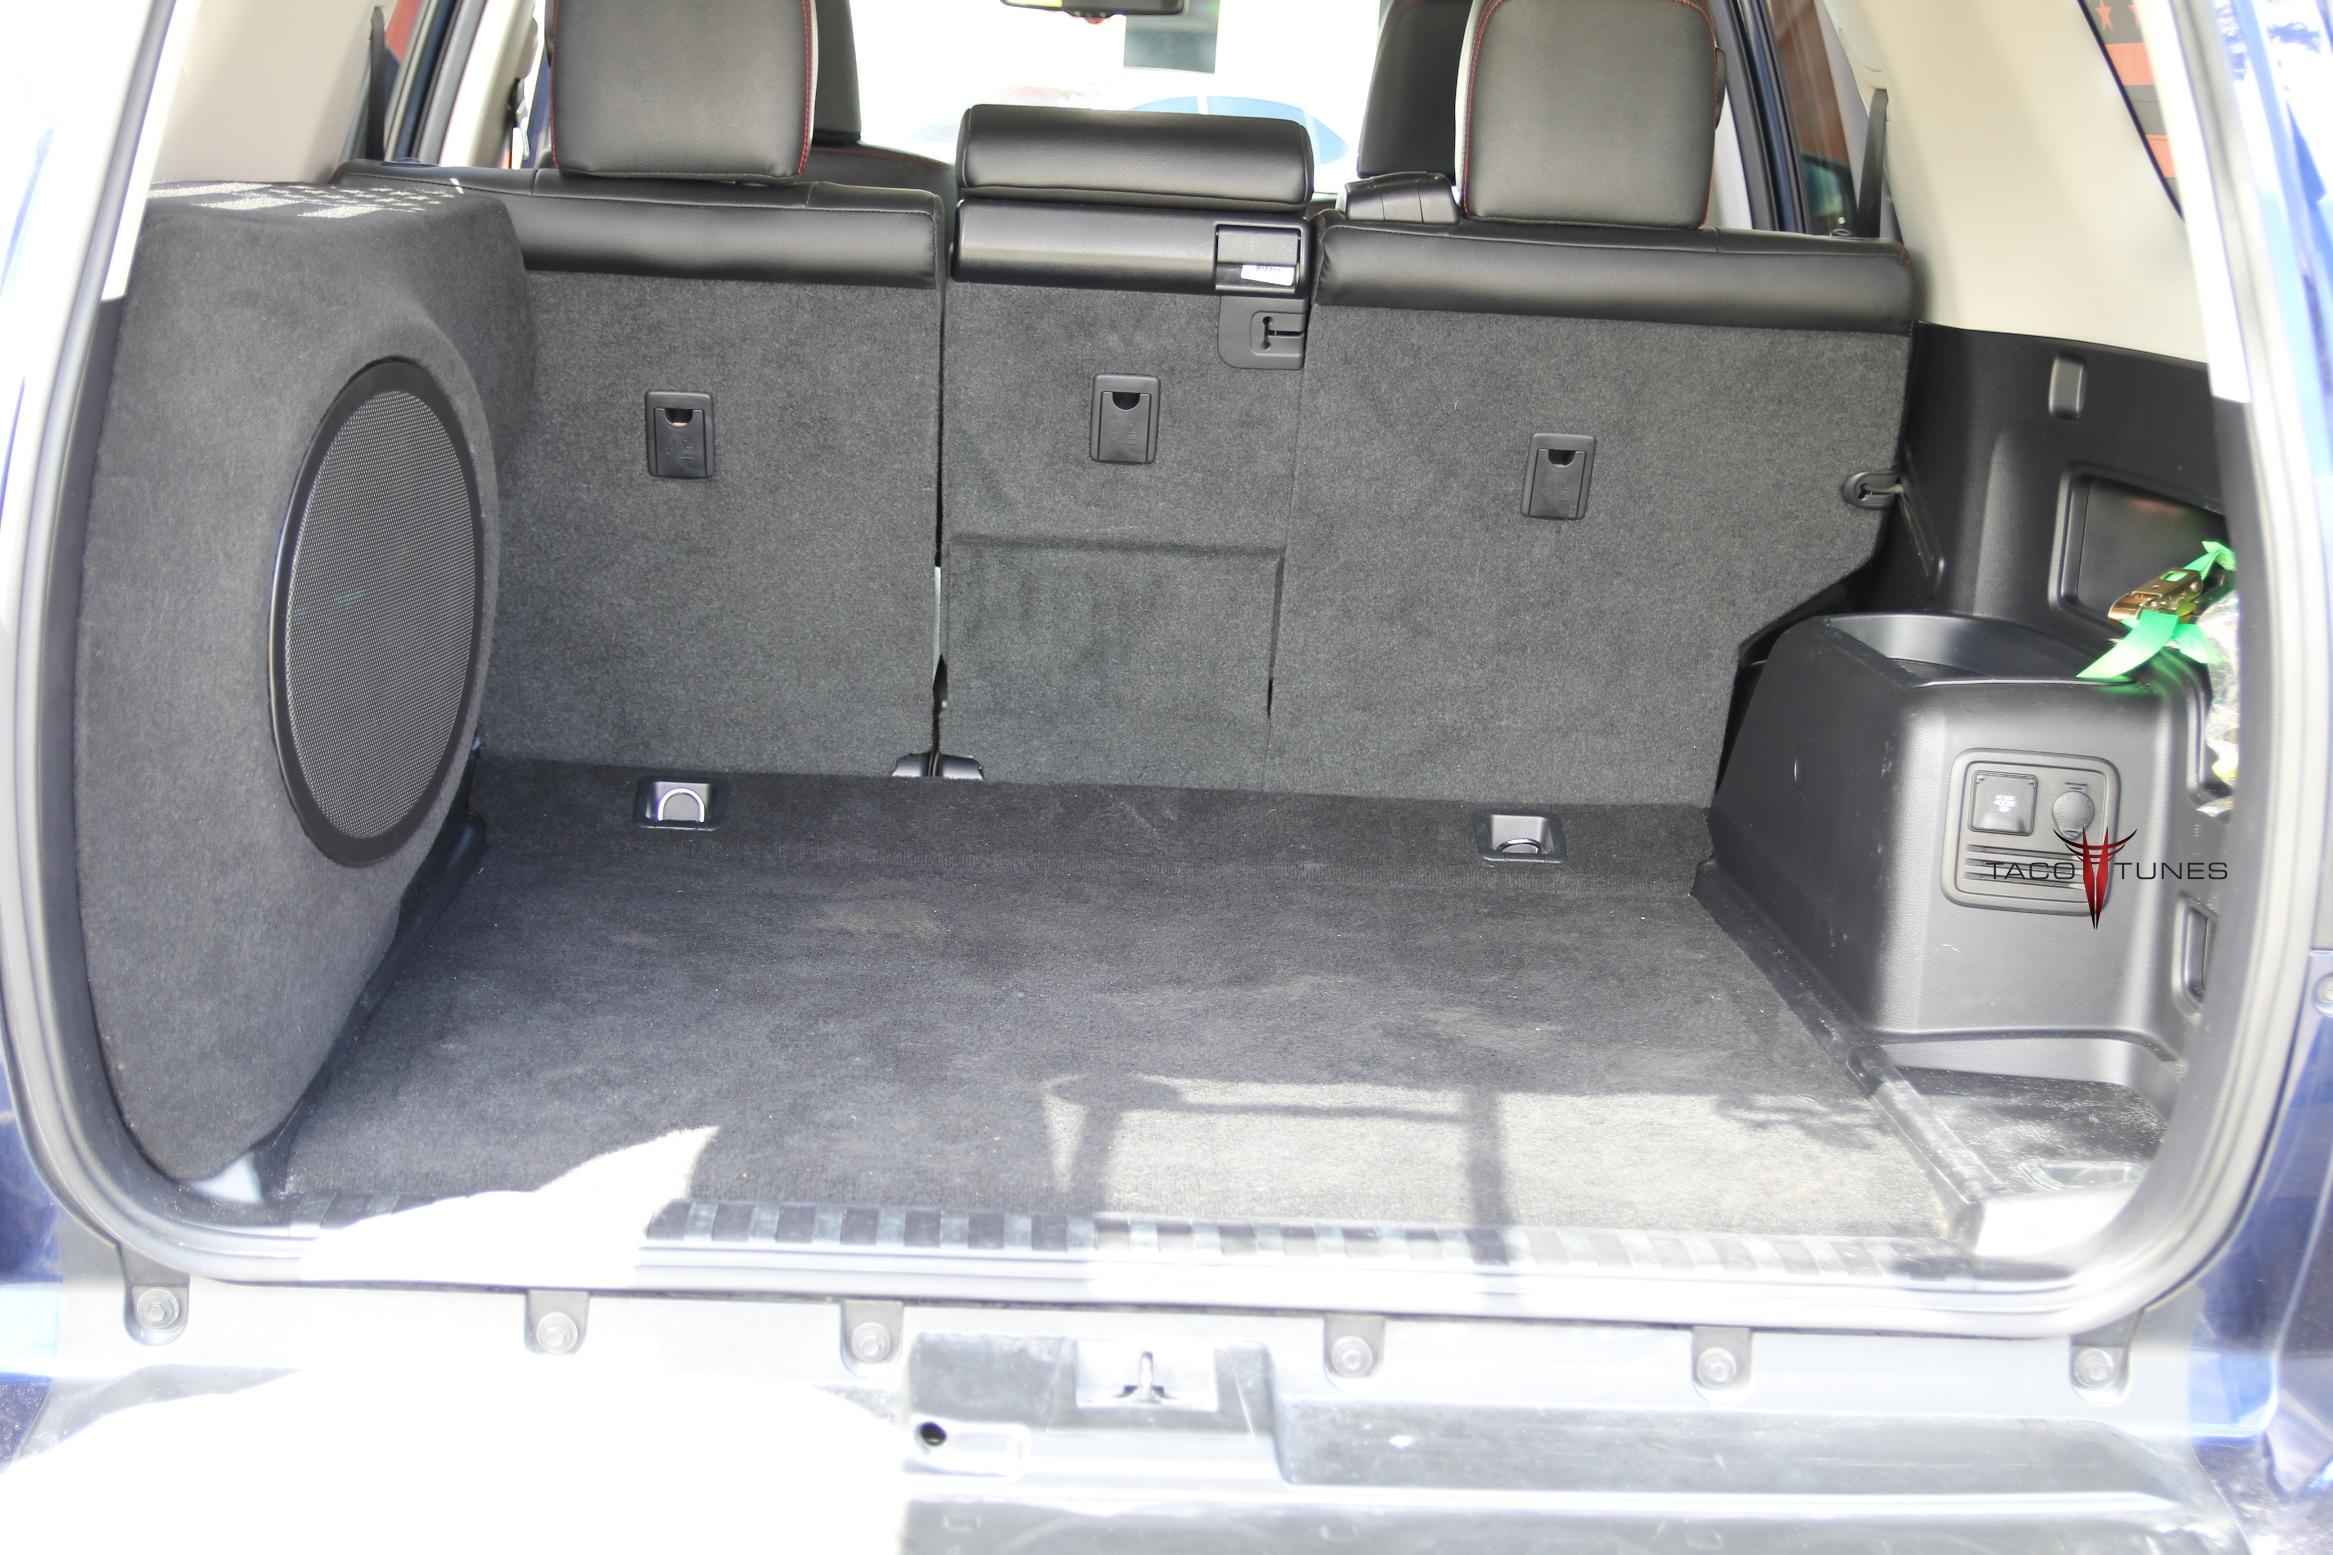 Toyota 4Runner Subwoofer Box fiberglass enclosure 12 inch